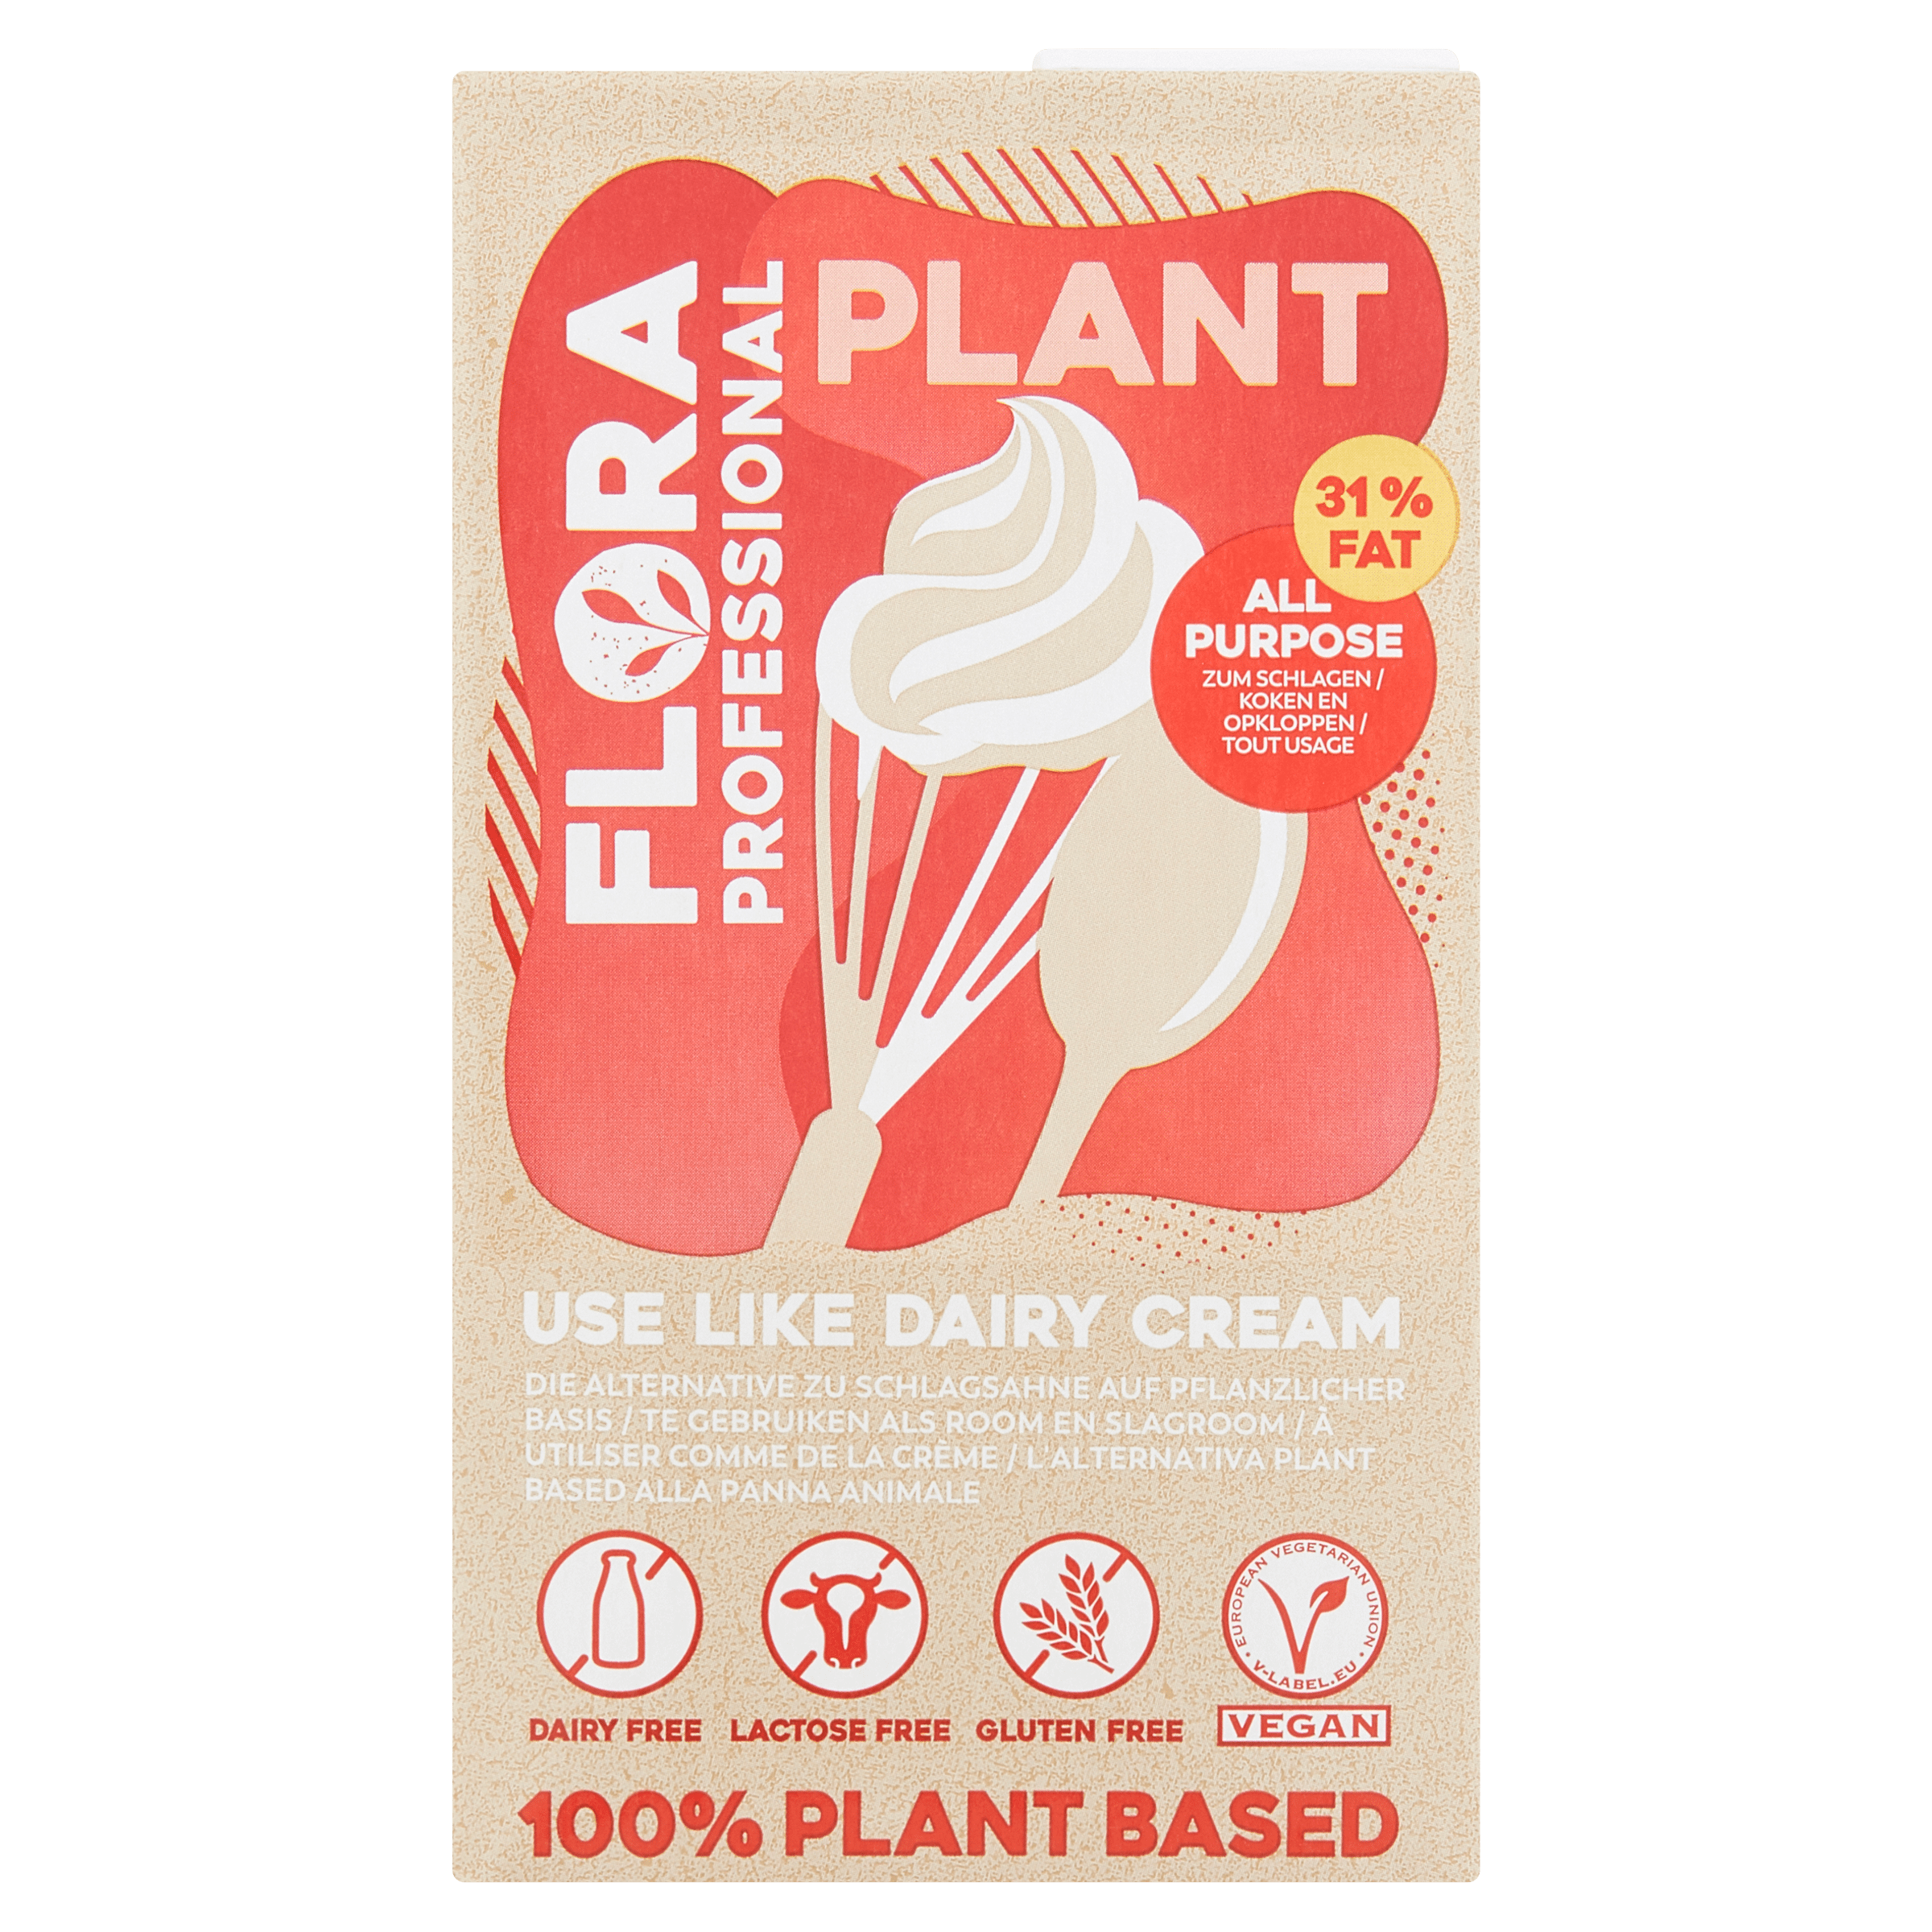 Flora Professional Plant 31% All Purpose